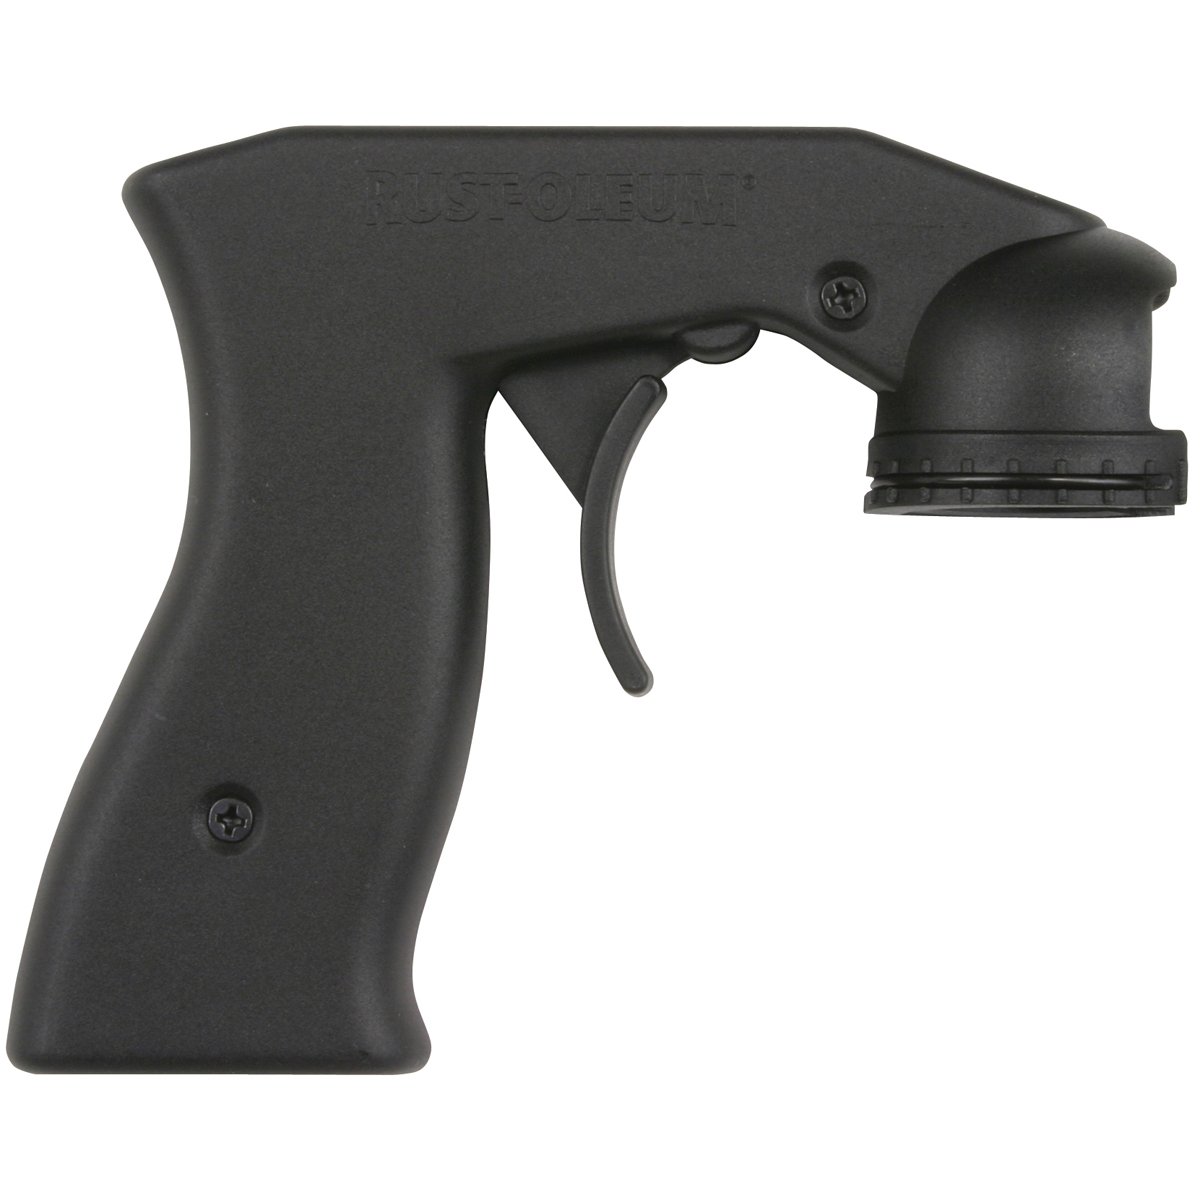 Rust-Oleum 243546 Standard Spray Grip